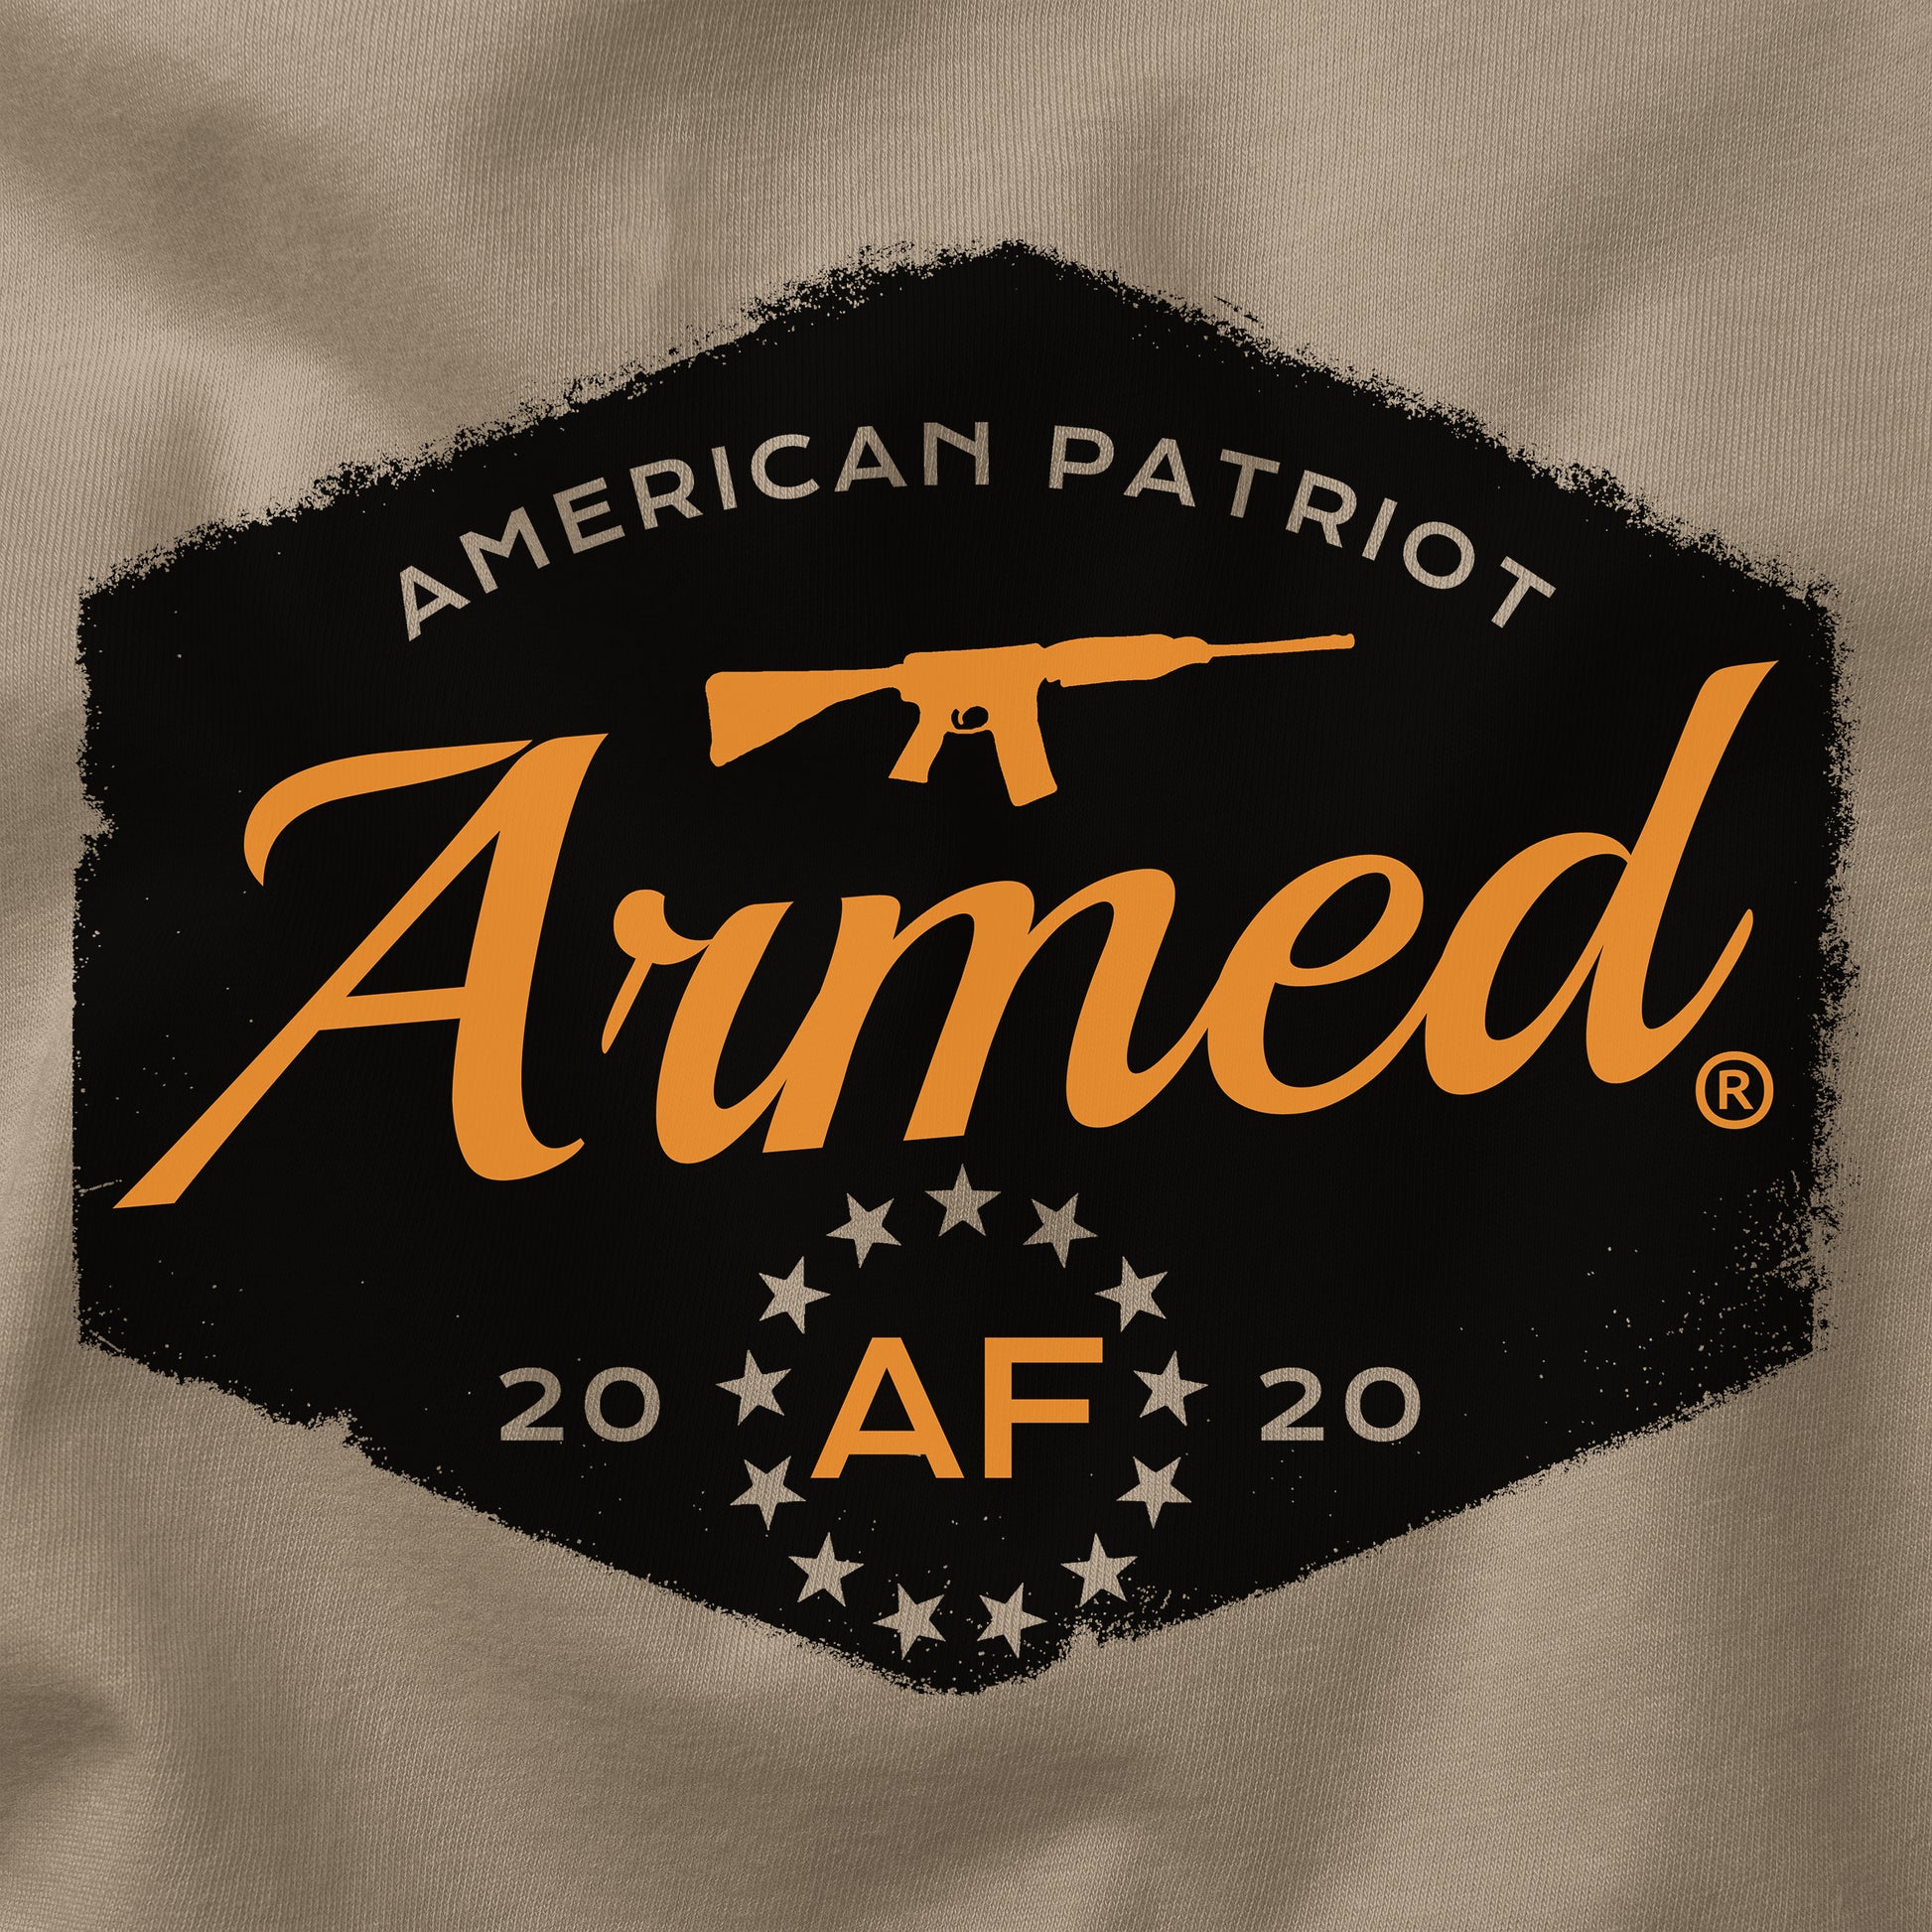 Patriot t-shirt design closeup